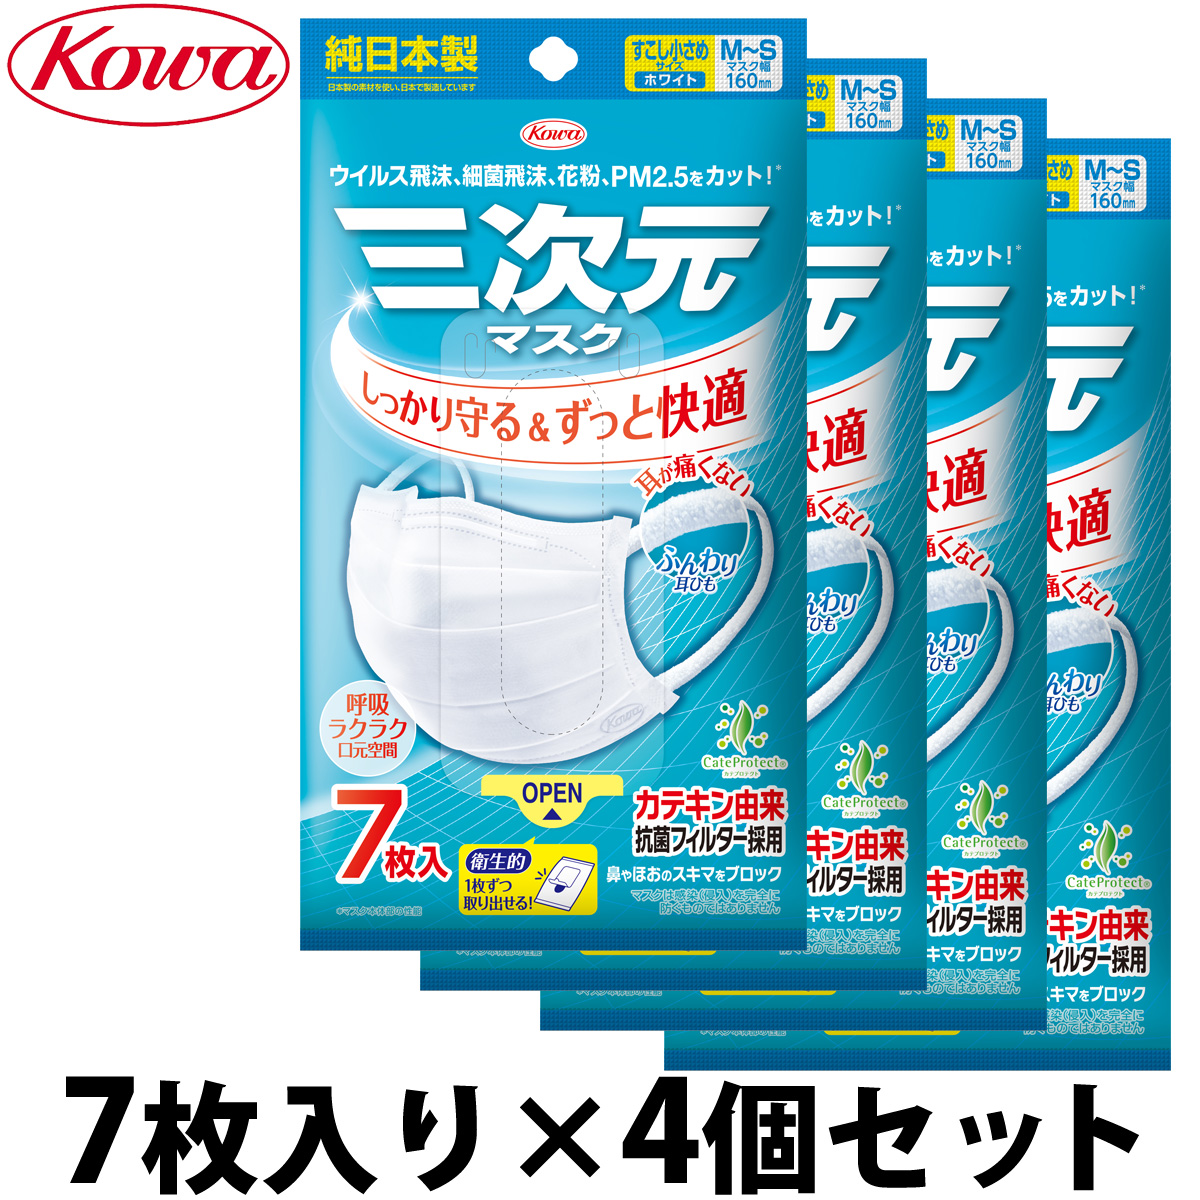 Kowa Kowa 三次元マスク すこし小さめMSサイズ ホワイト 7枚入 × 4個 三次元マスク 衛生用品マスクの商品画像